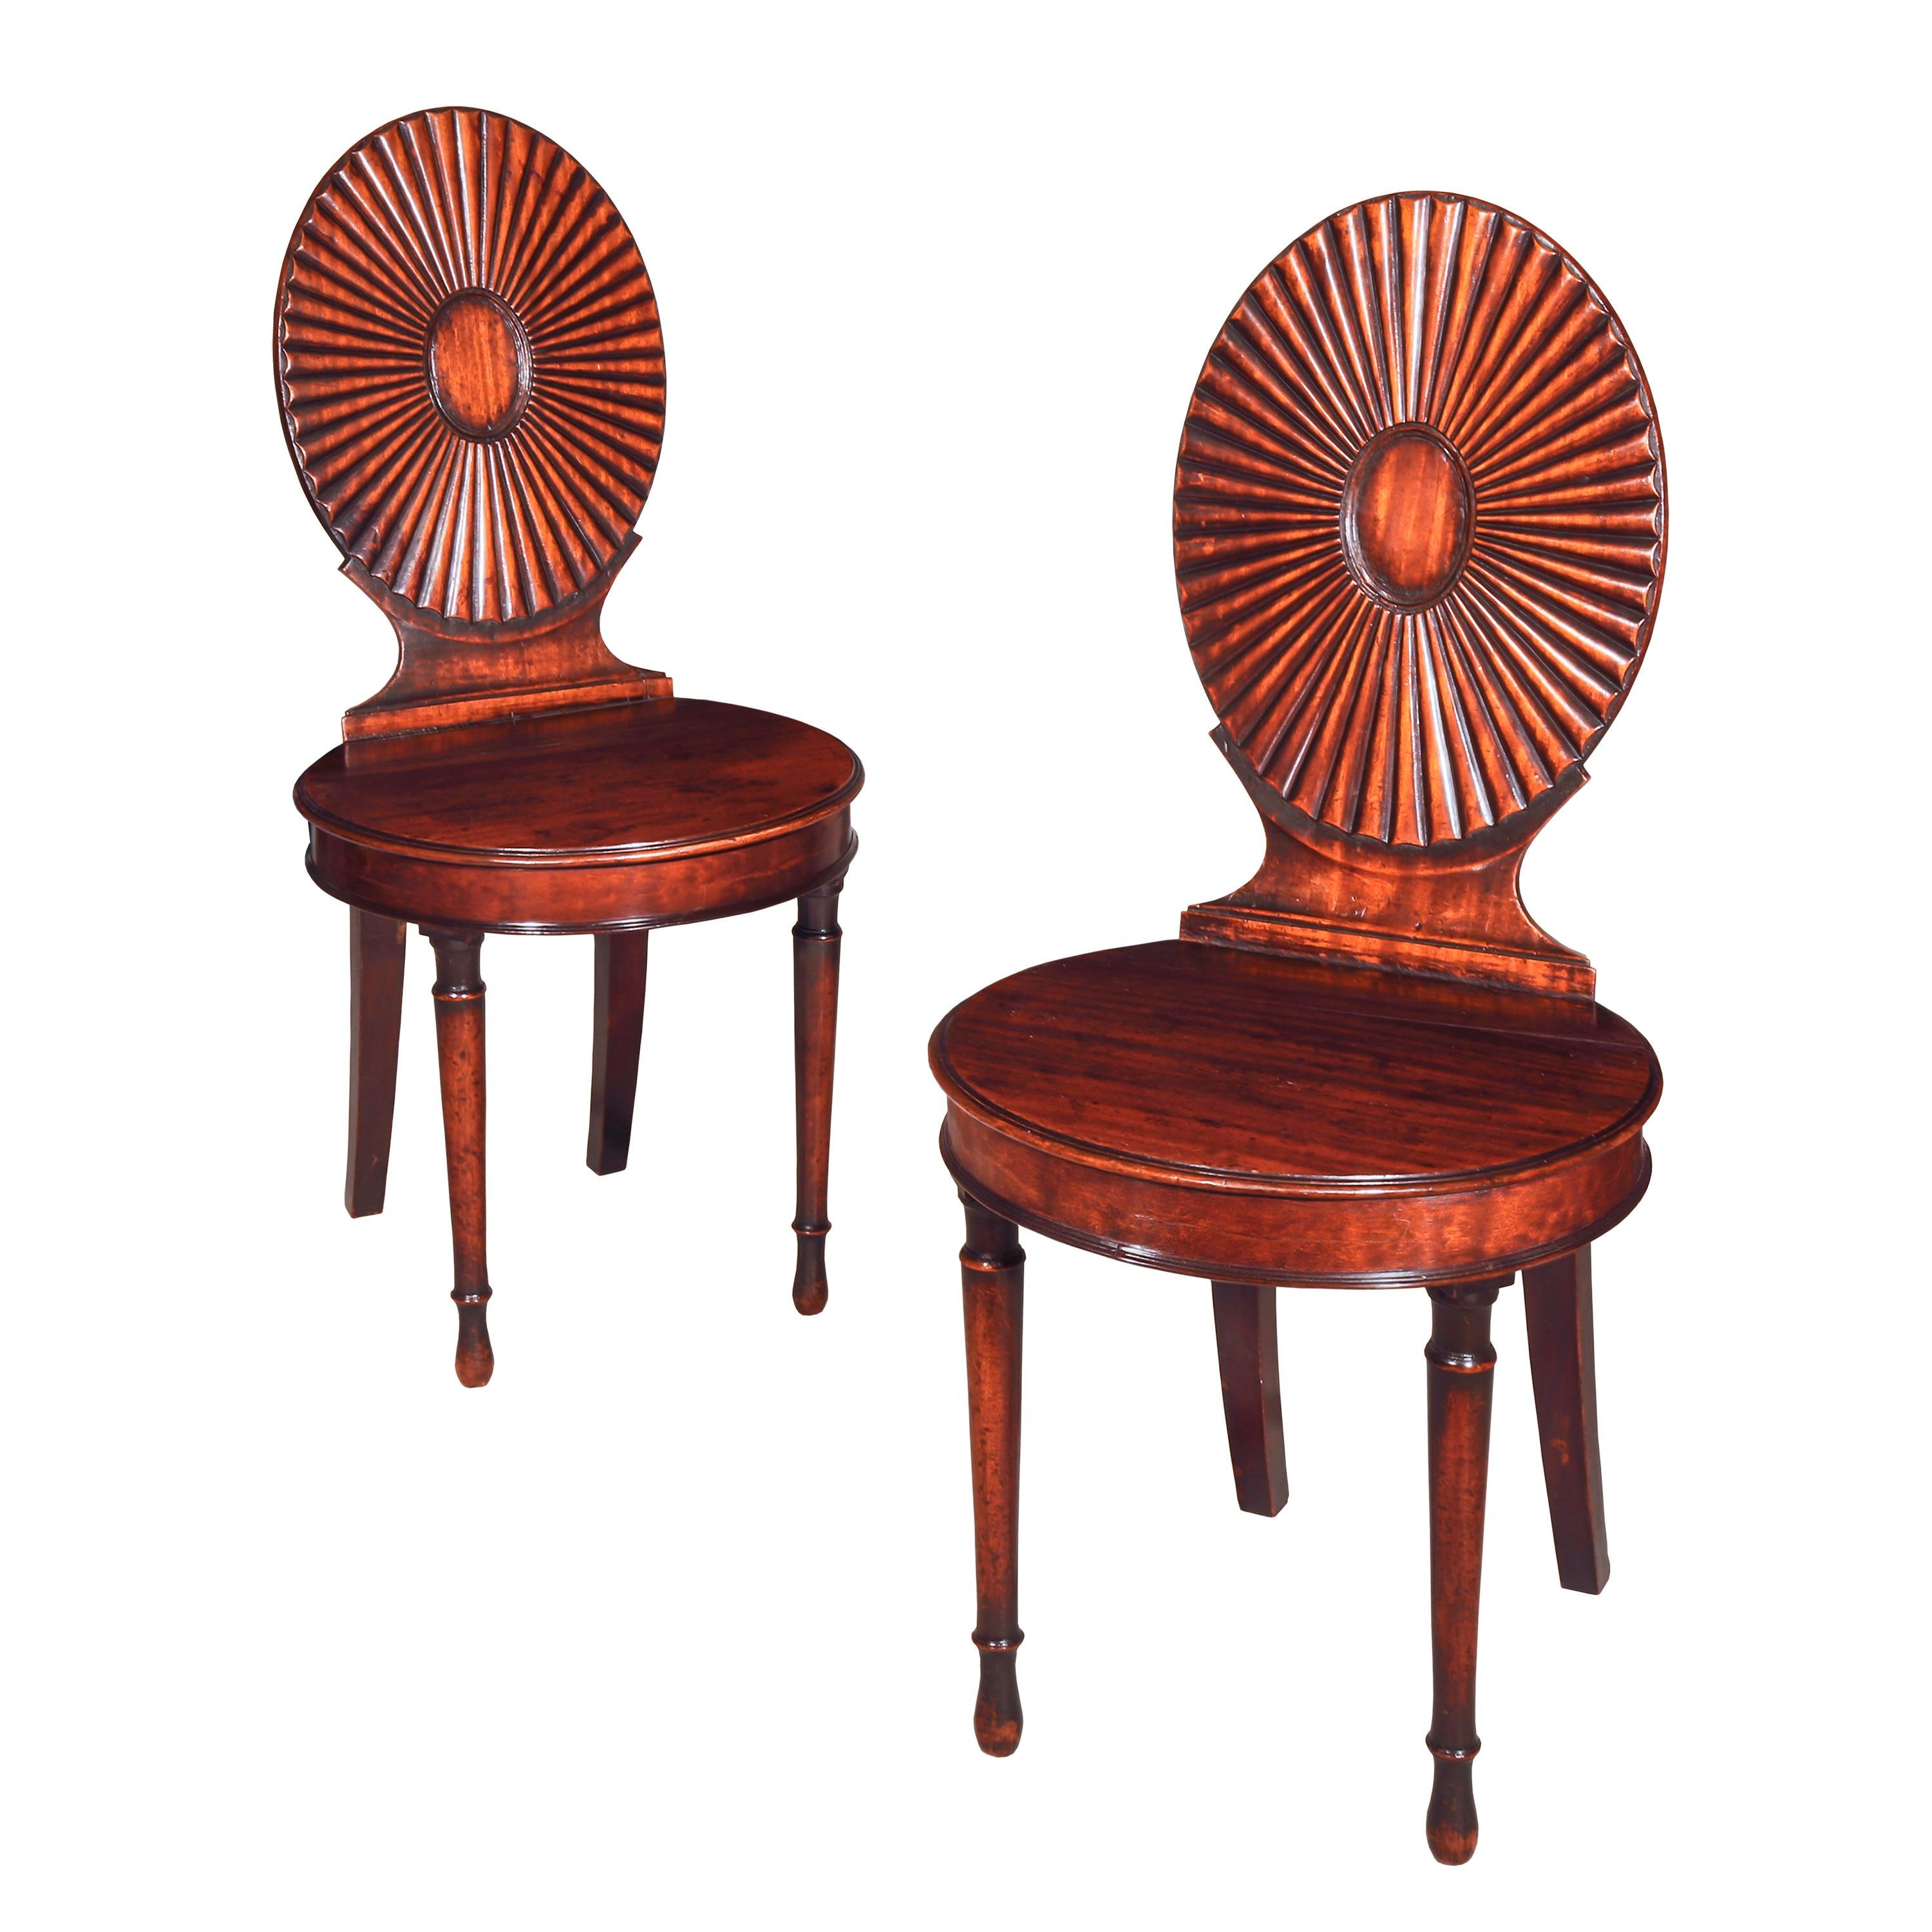 18th Century English Neoclassical Pair of Chairs, circa 1780